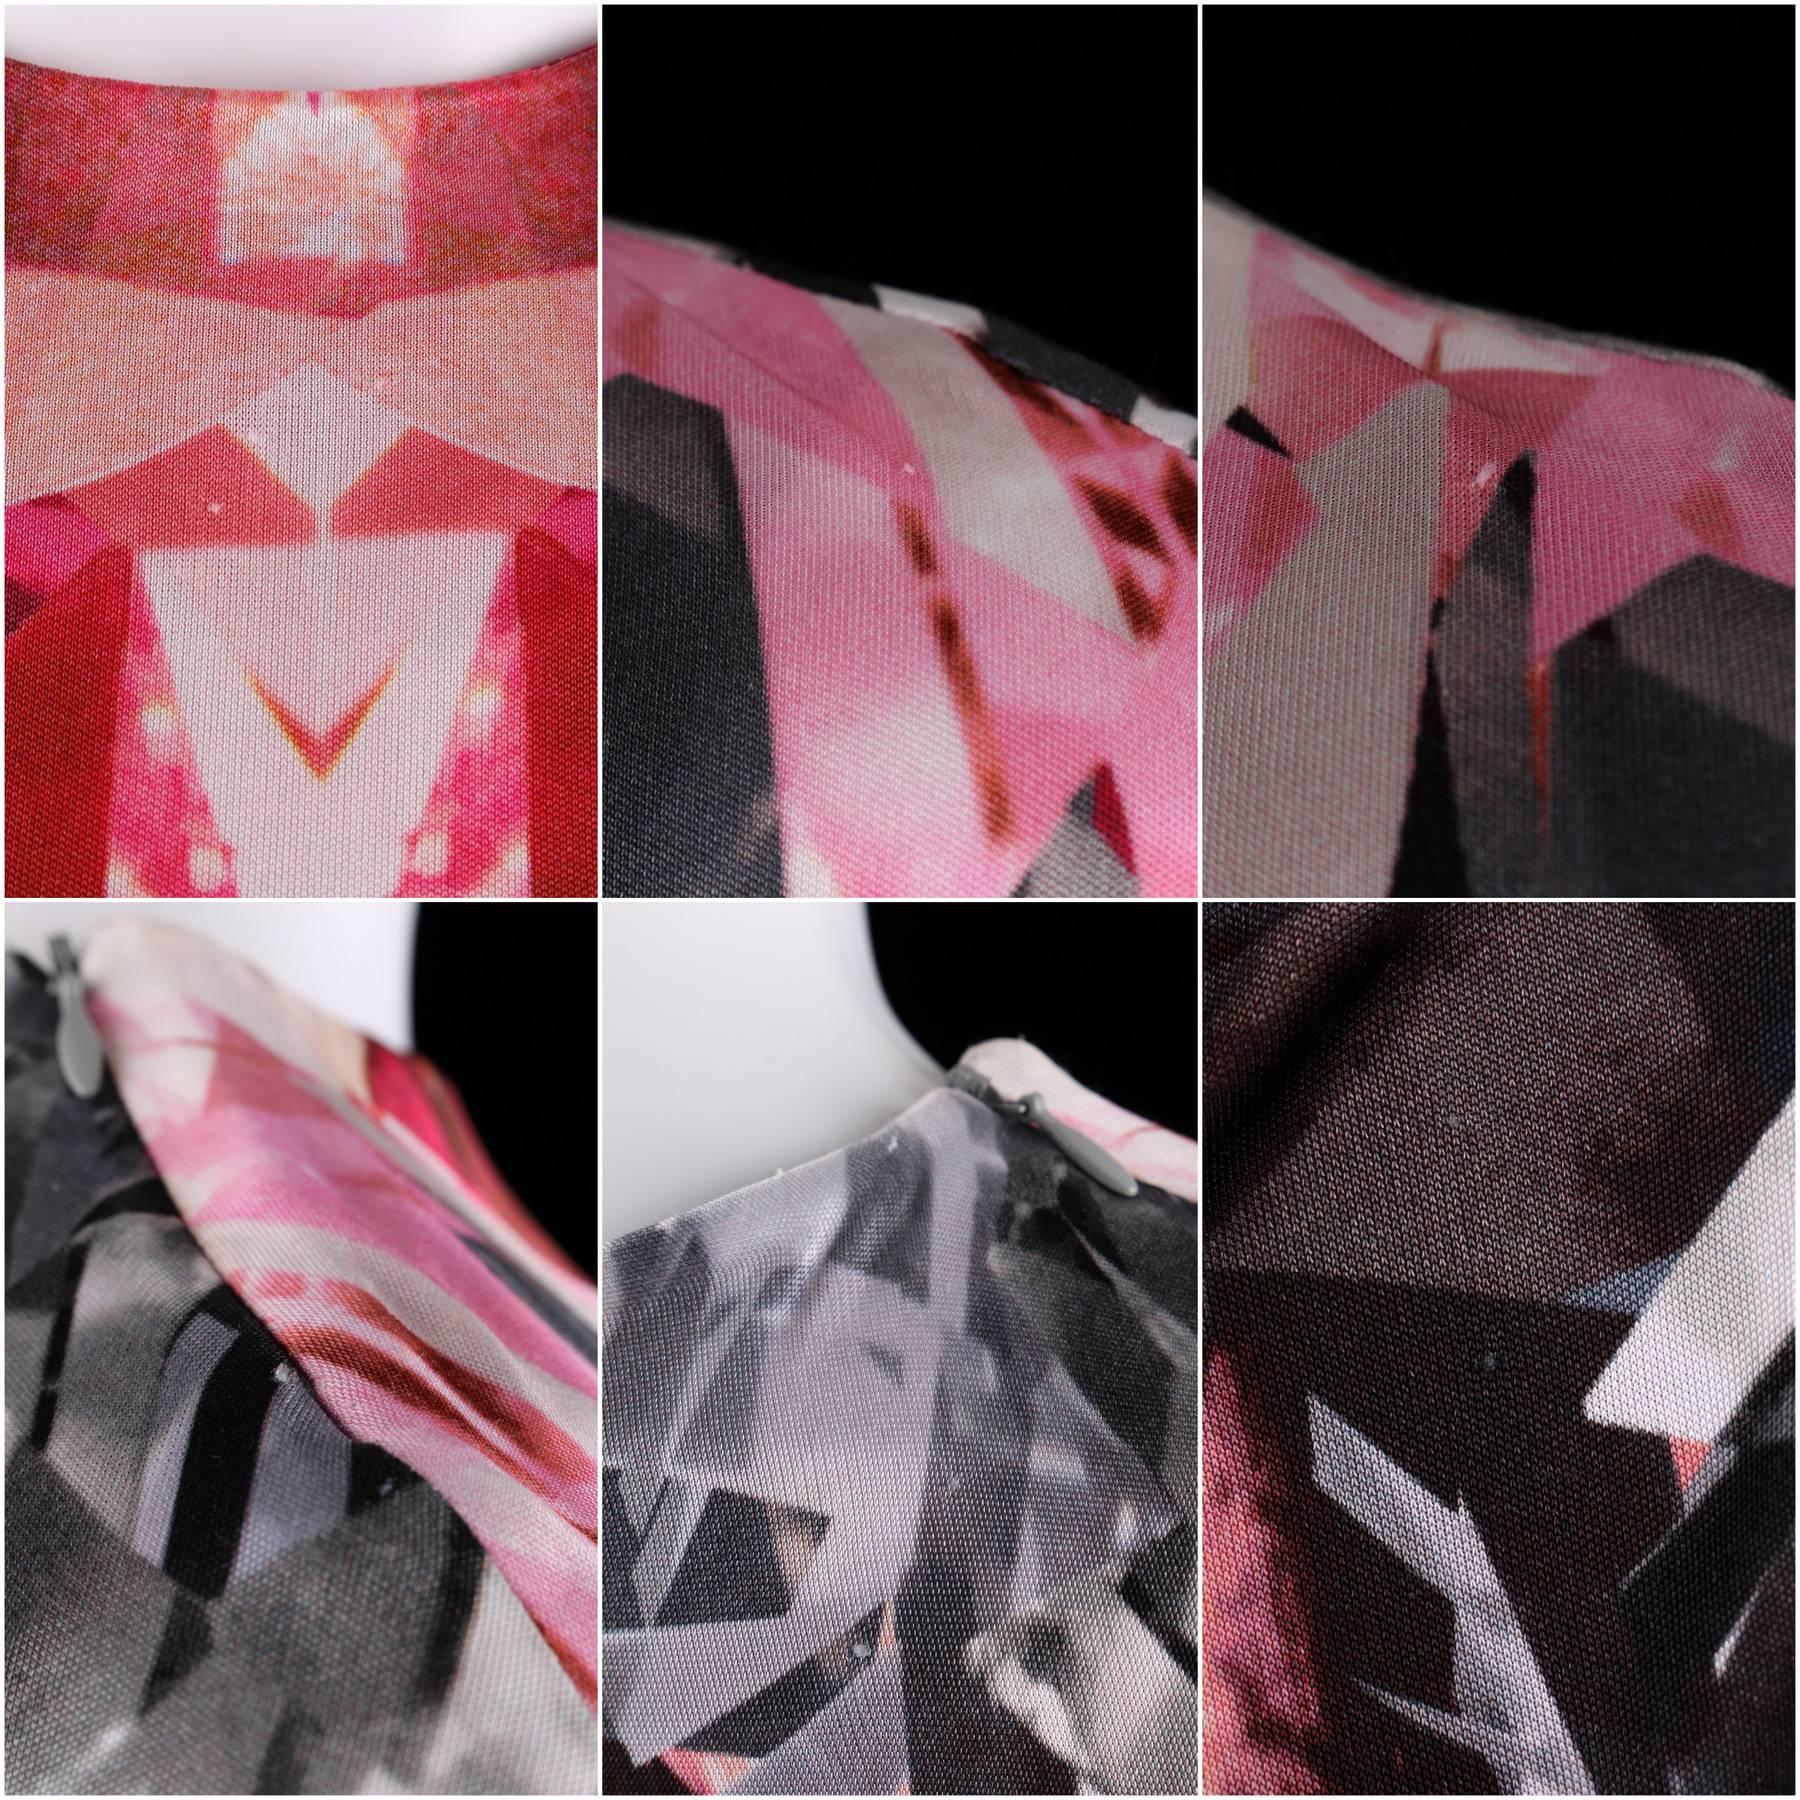 ALEXANDER McQUEEN  S/S 2009 Iconic Crystal Kaleidoscope Print Dress Size 42 4